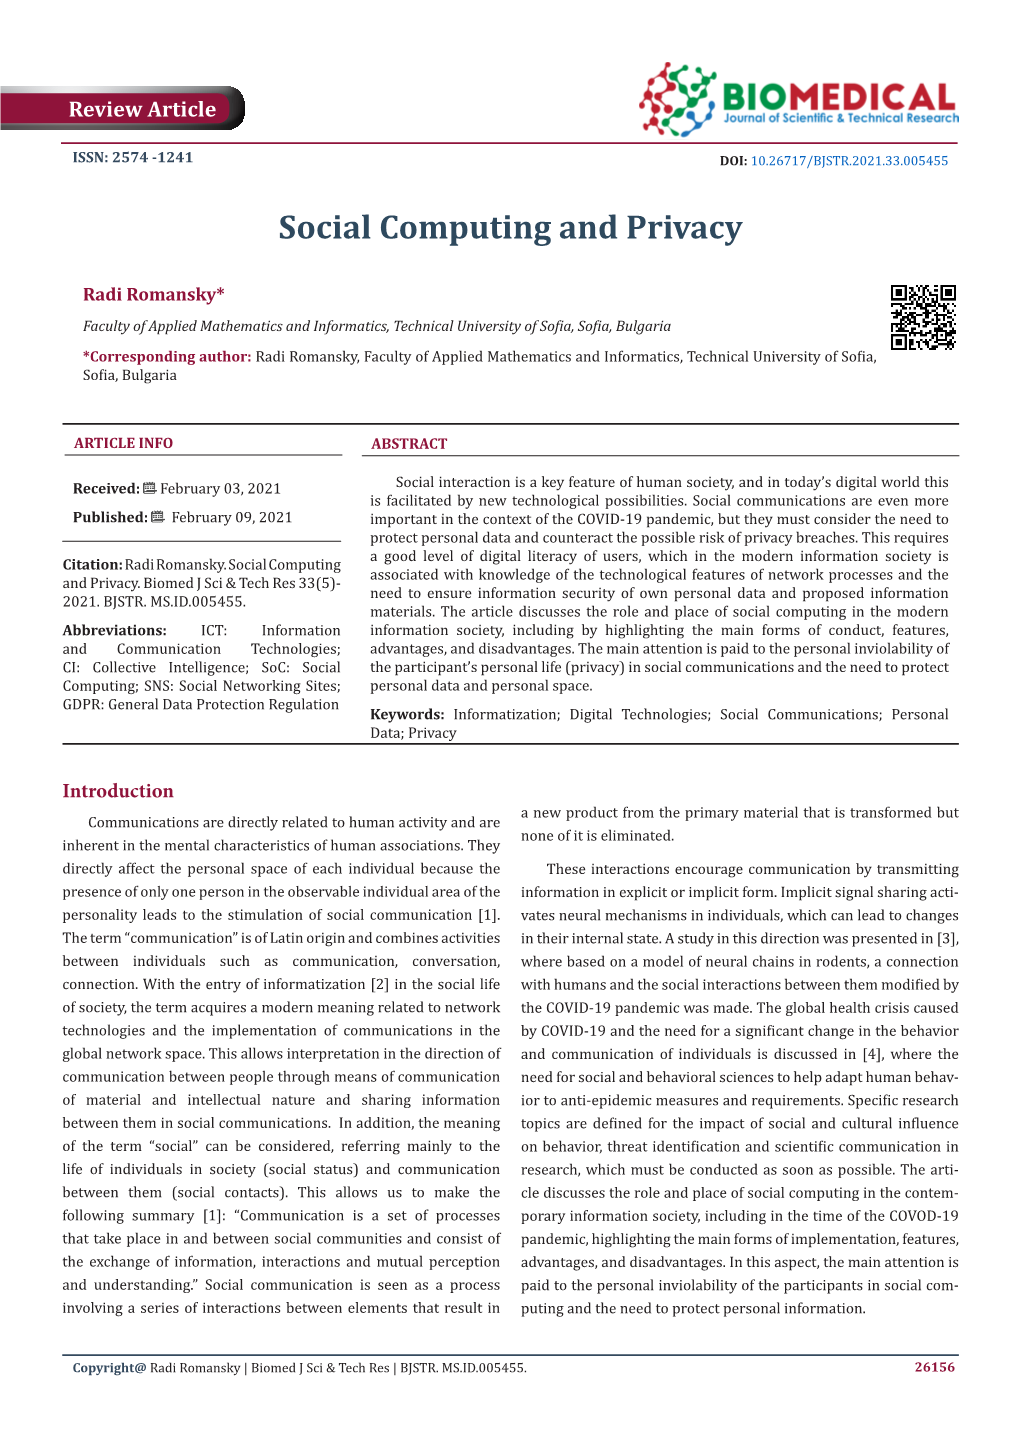 Social Computing and Privacy